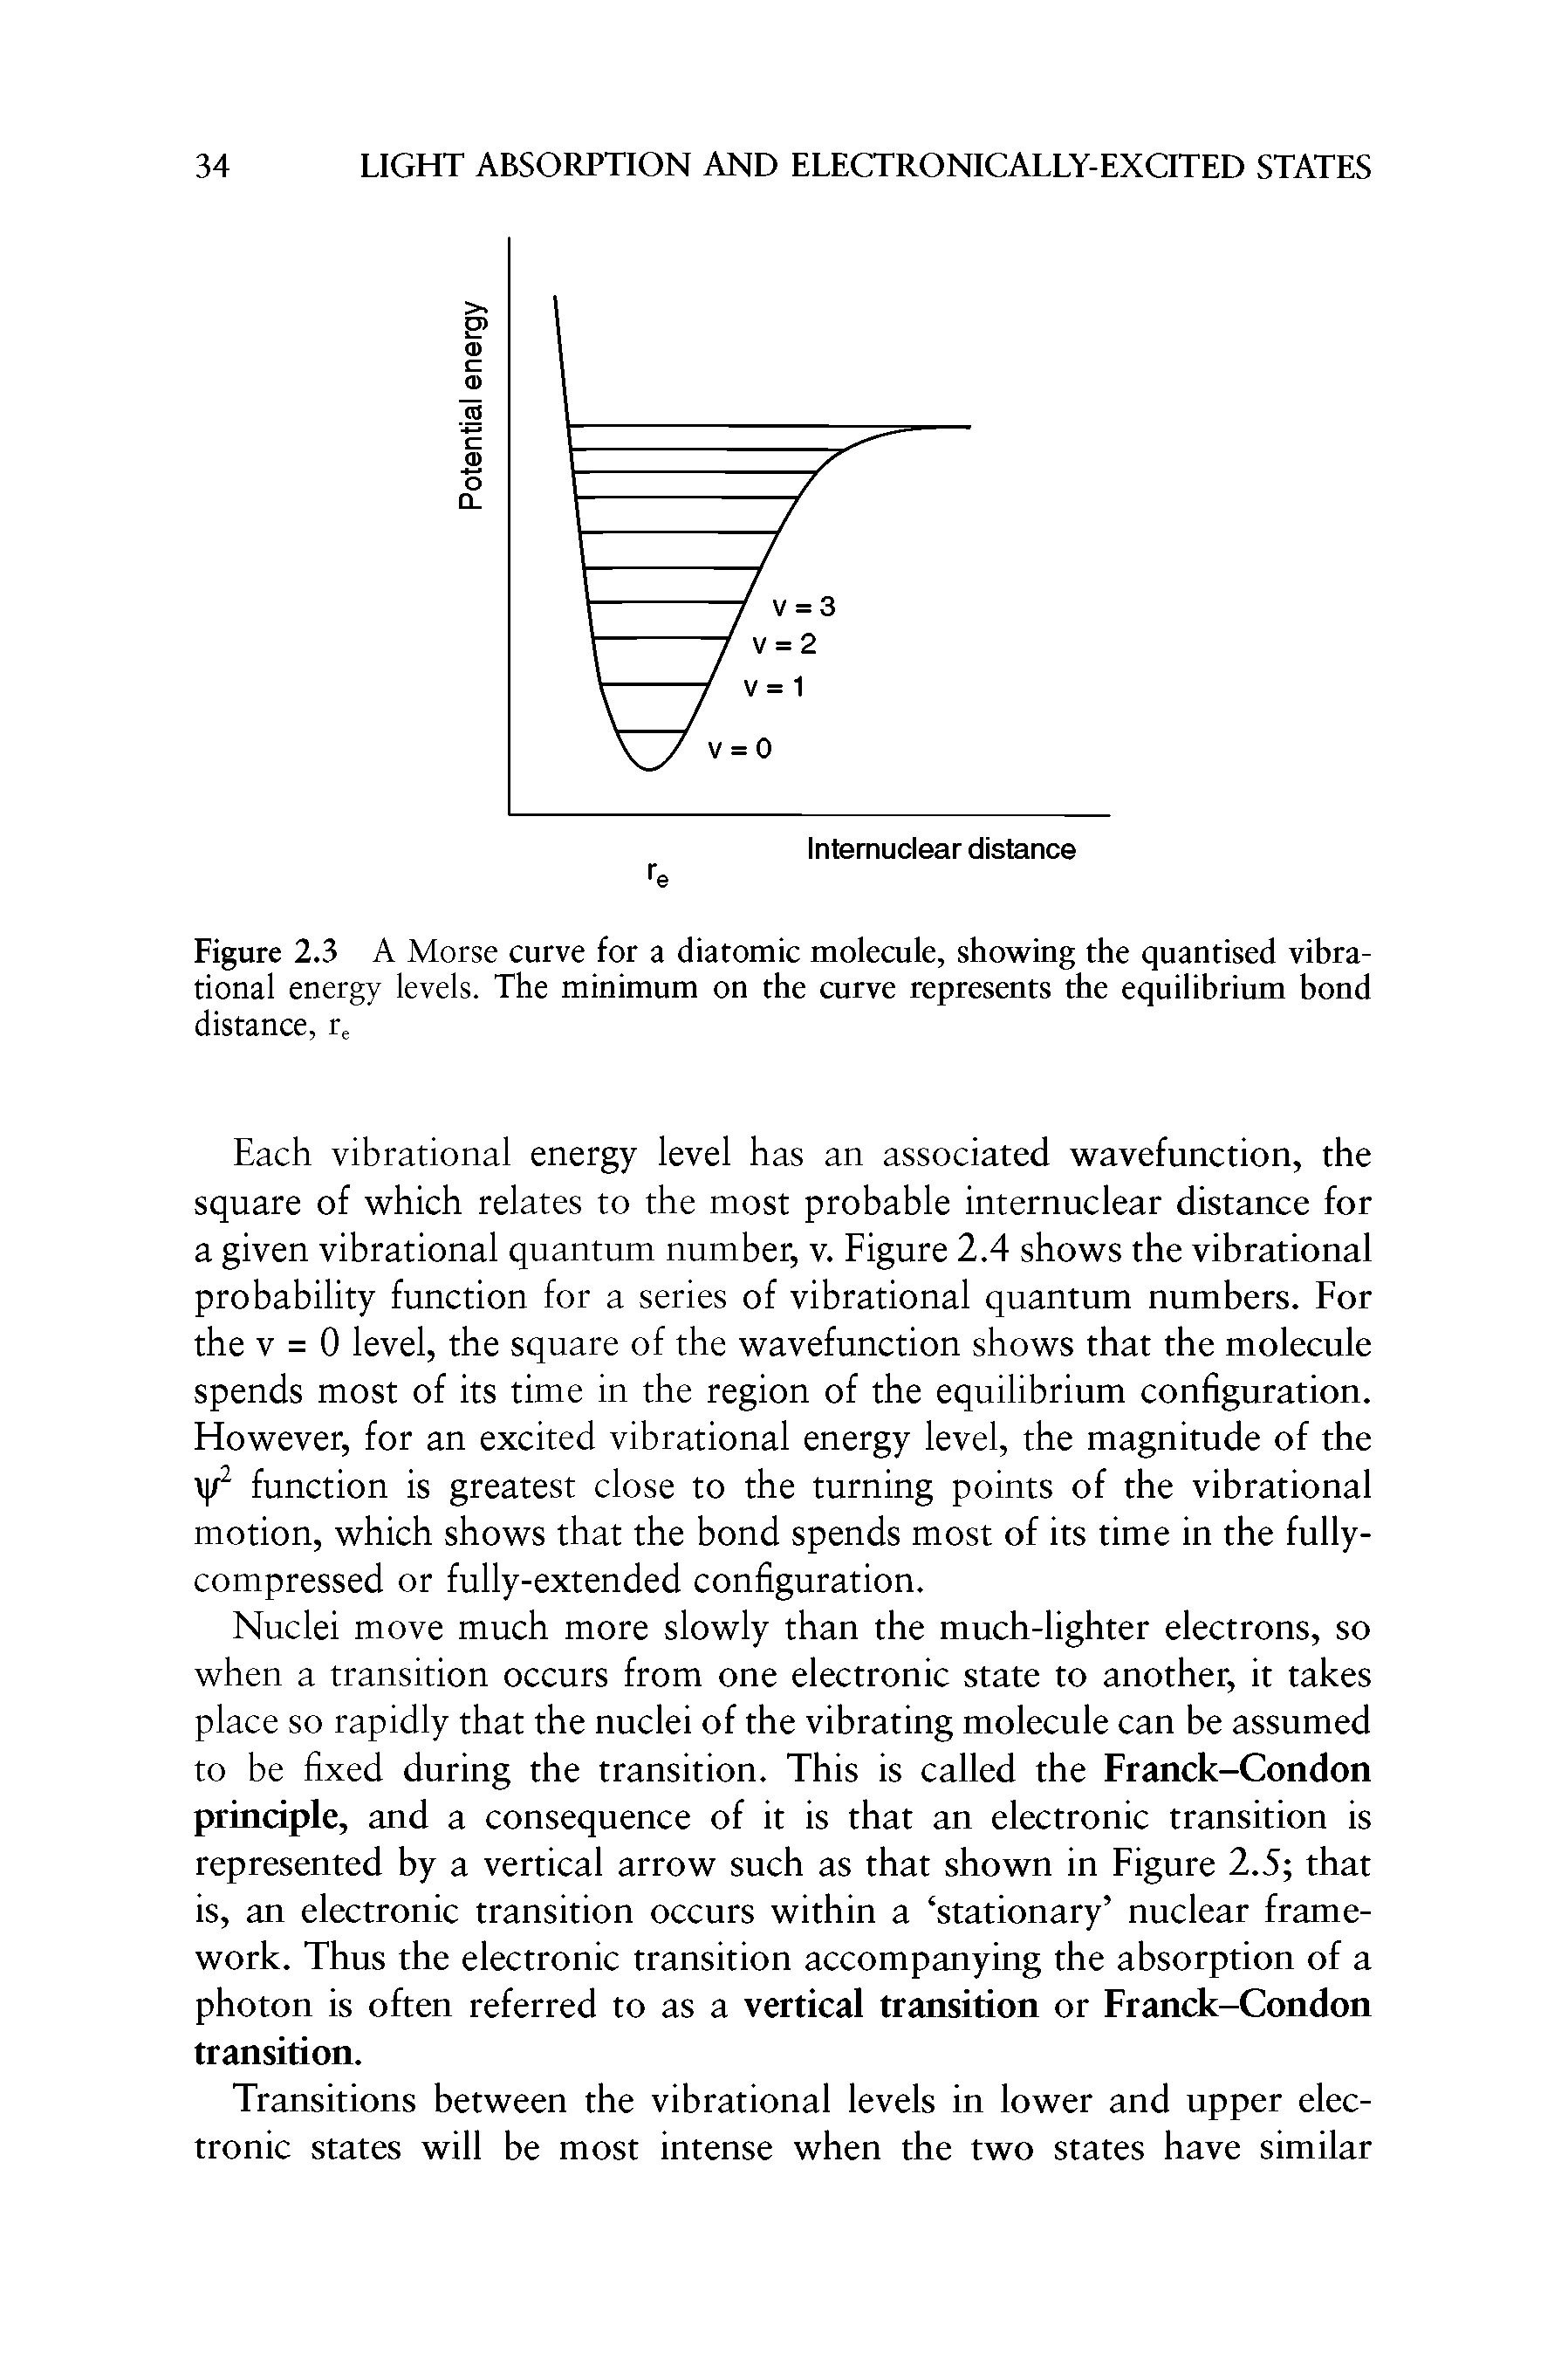 Figure 2.3 A Morse curve for a diatomic molecule, showing the quantised vibrational energy levels. The minimum on the curve represents the equilibrium bond distance, re...